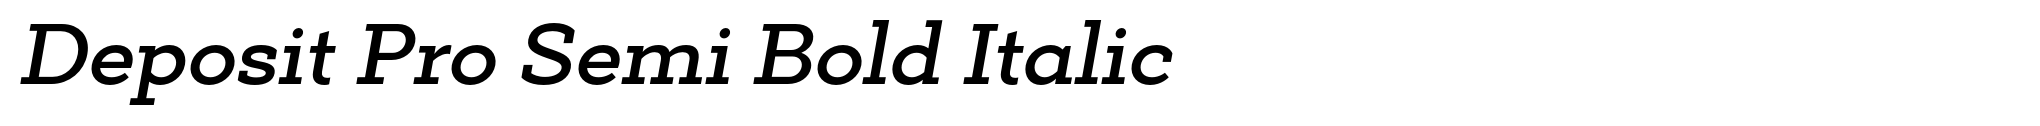 Deposit Pro Semi Bold Italic image